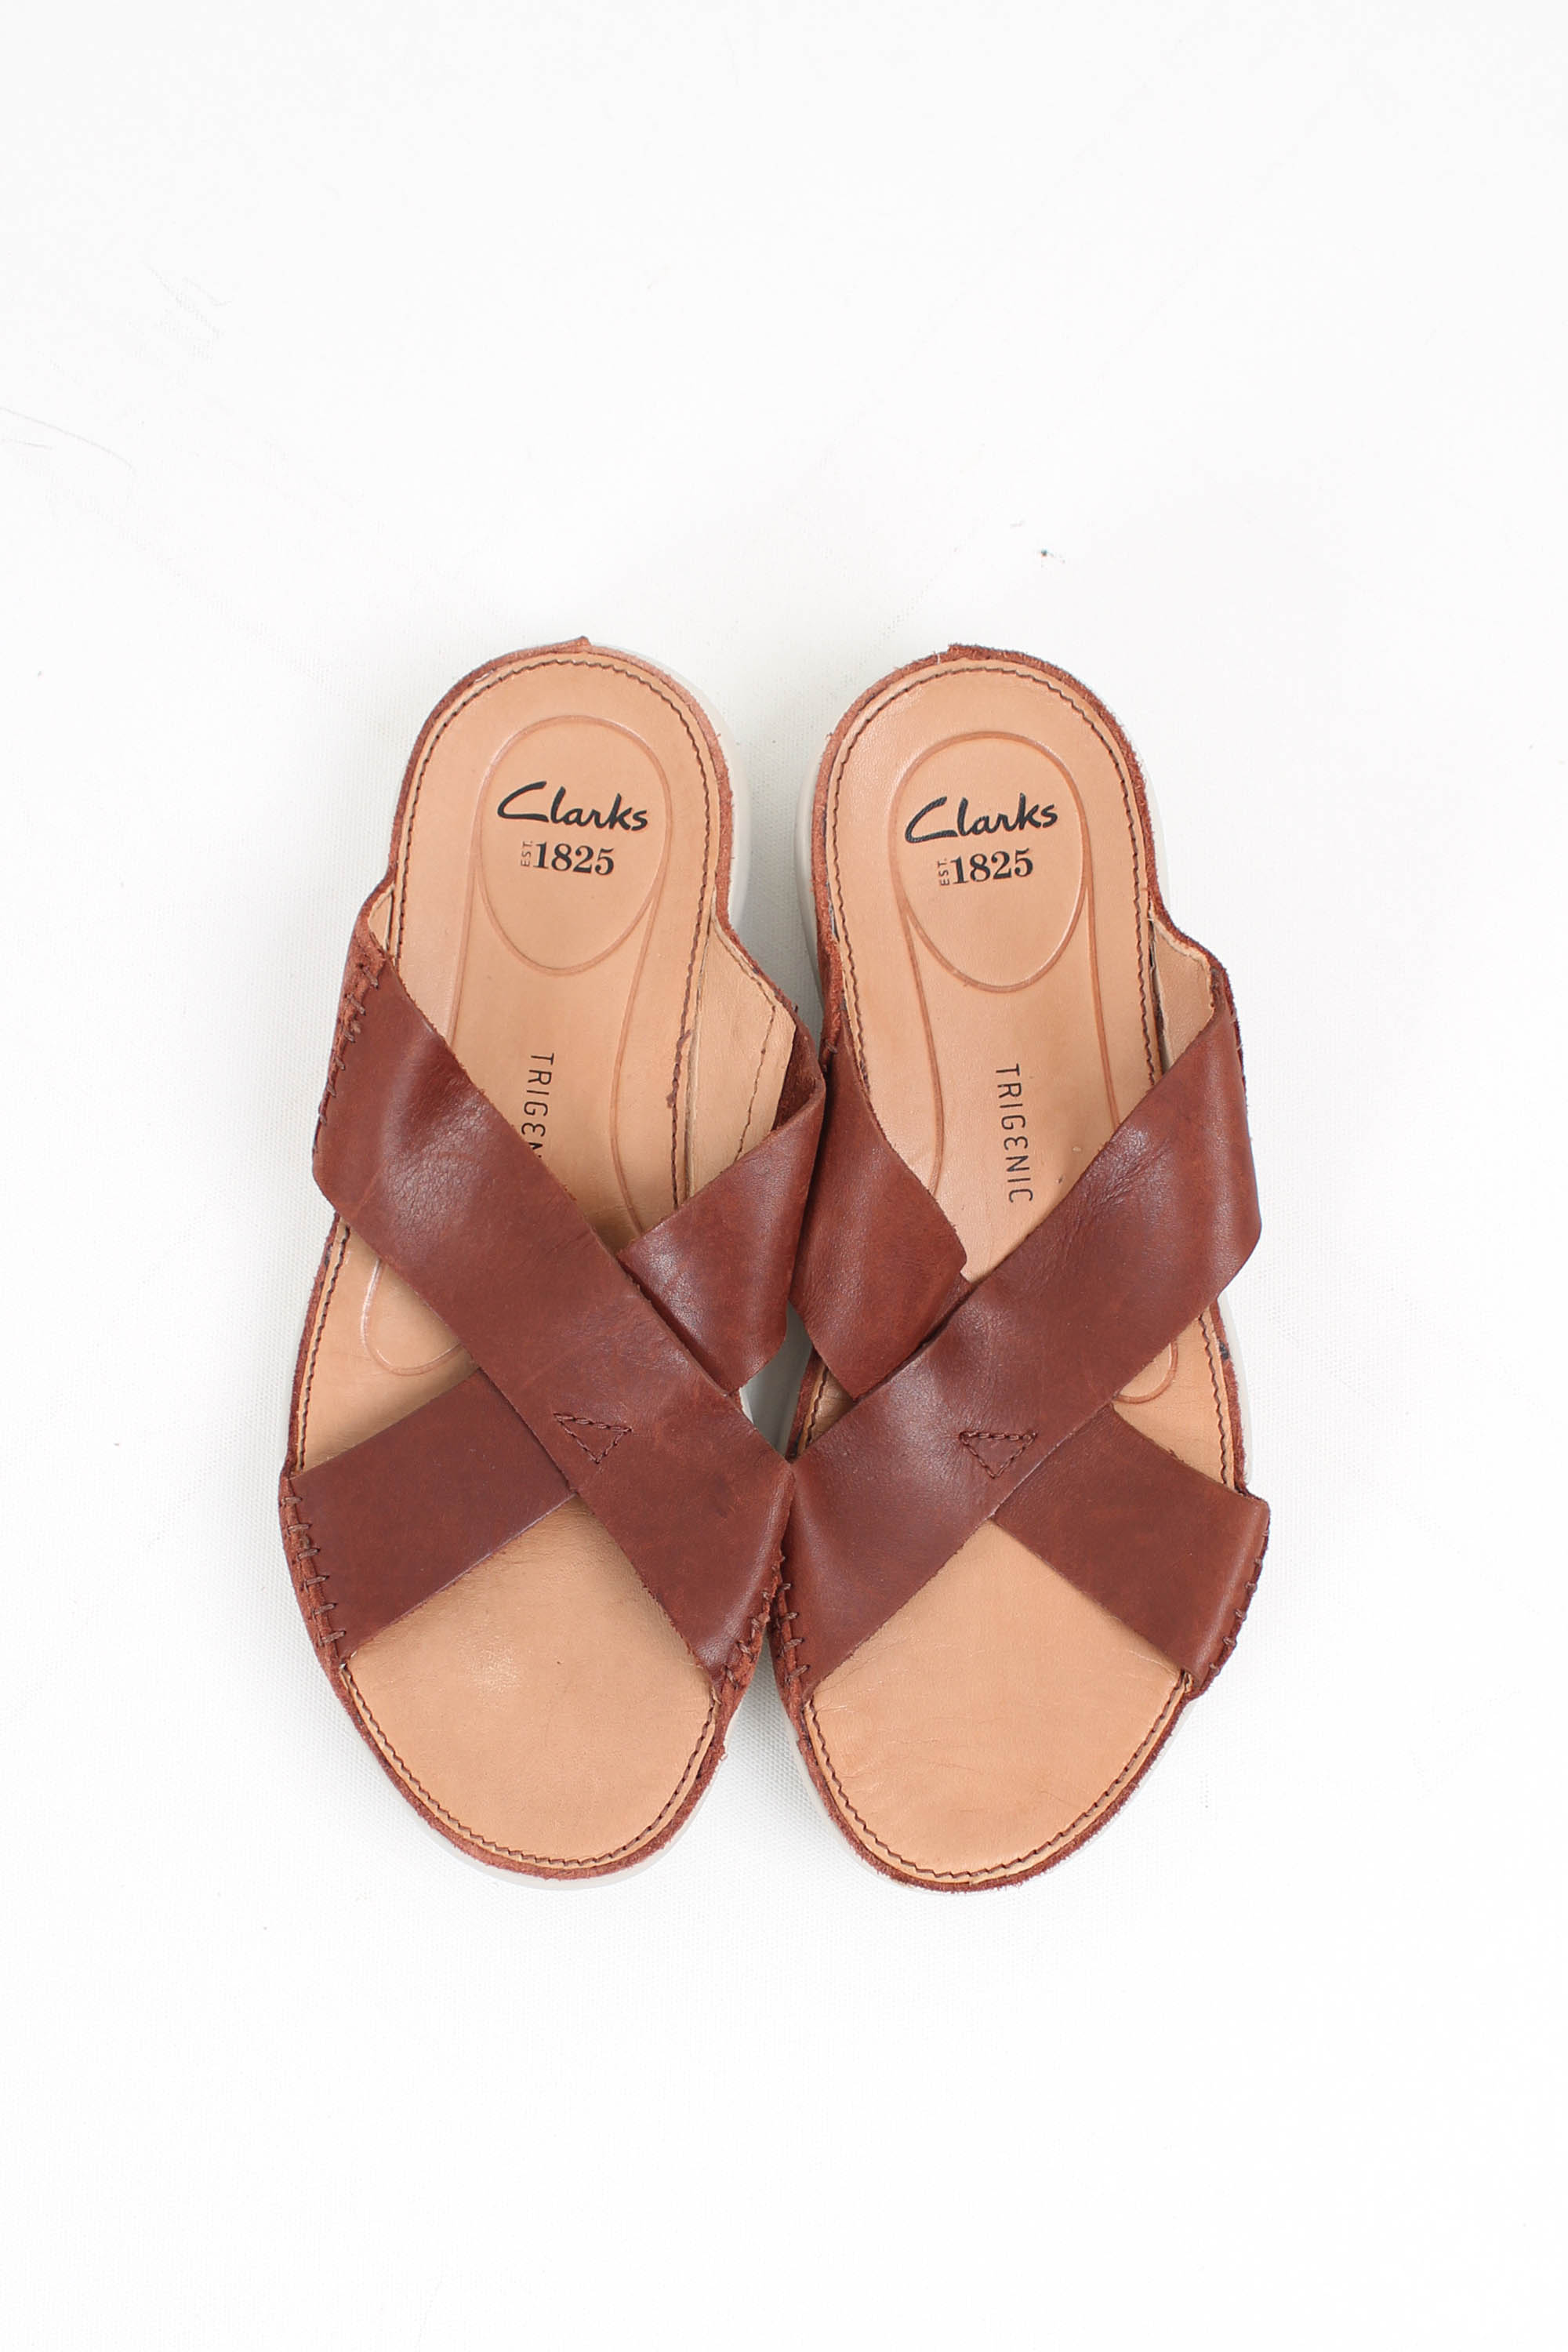 Clarks Trigenic Sandals